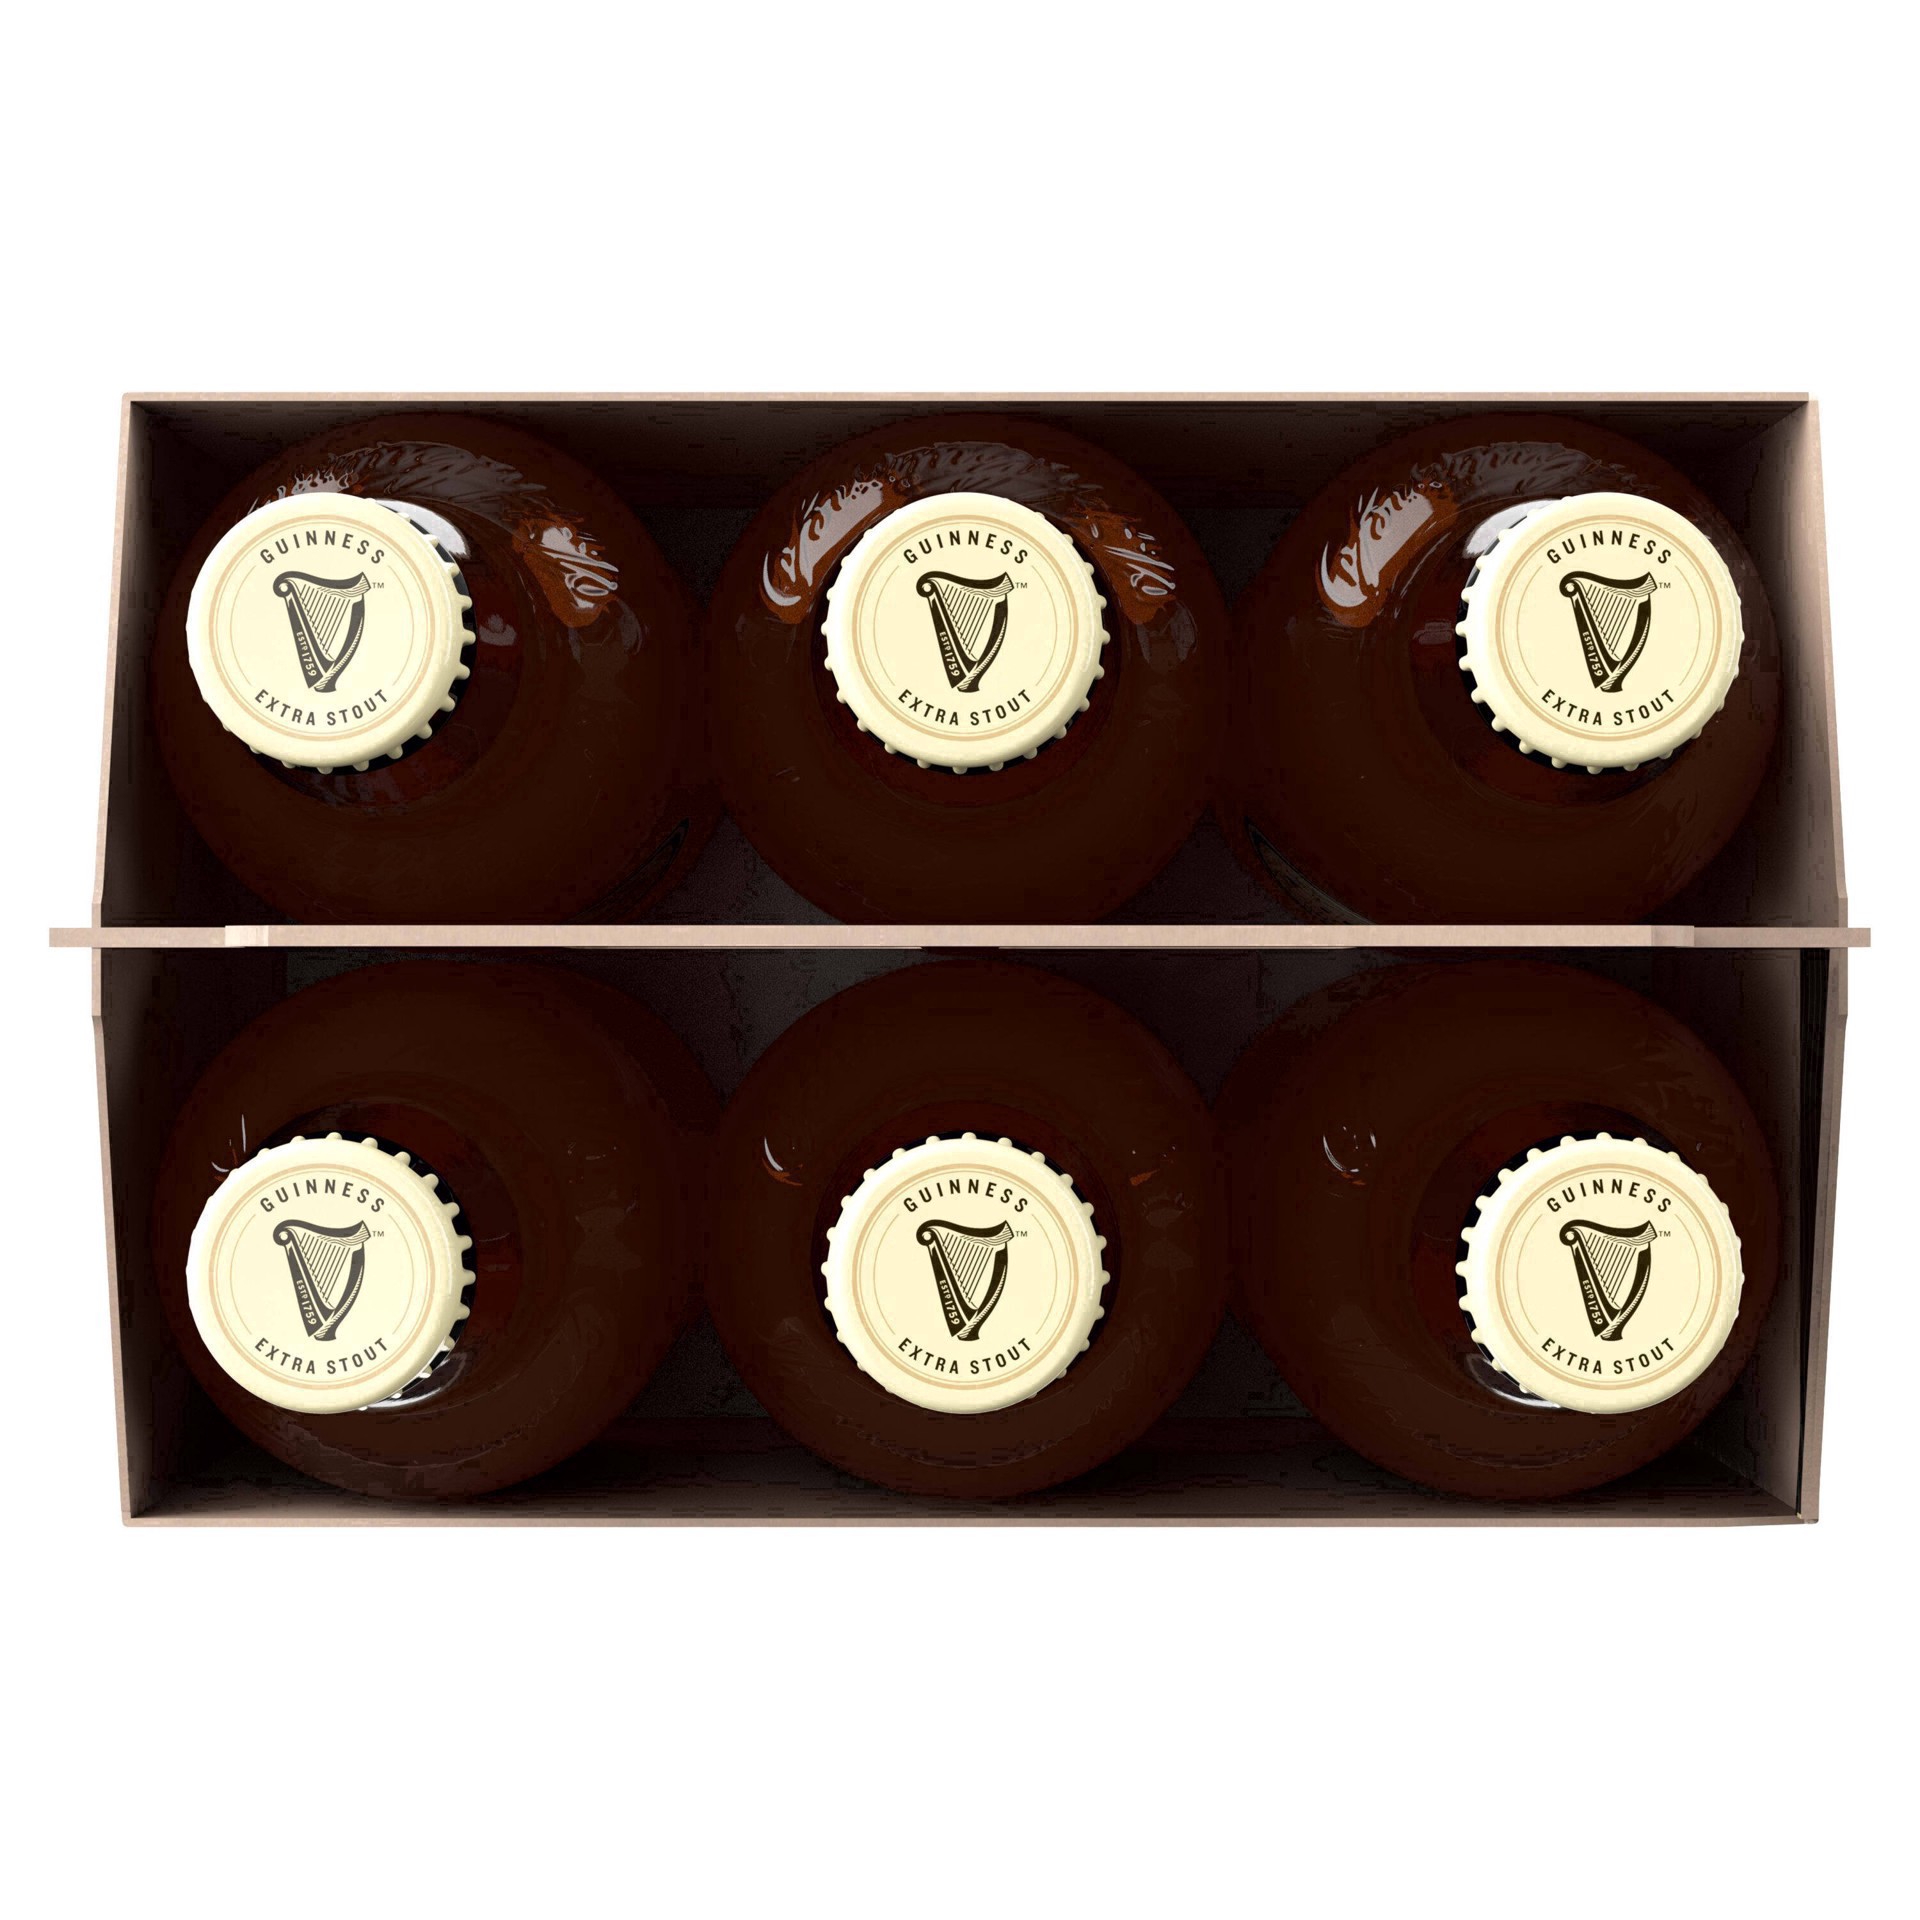 slide 6 of 89, Guinness Extra Stout Import Beer, 11.2 fl oz, 6 Pack Bottles, 5.6% ABV, 11.2 fl oz